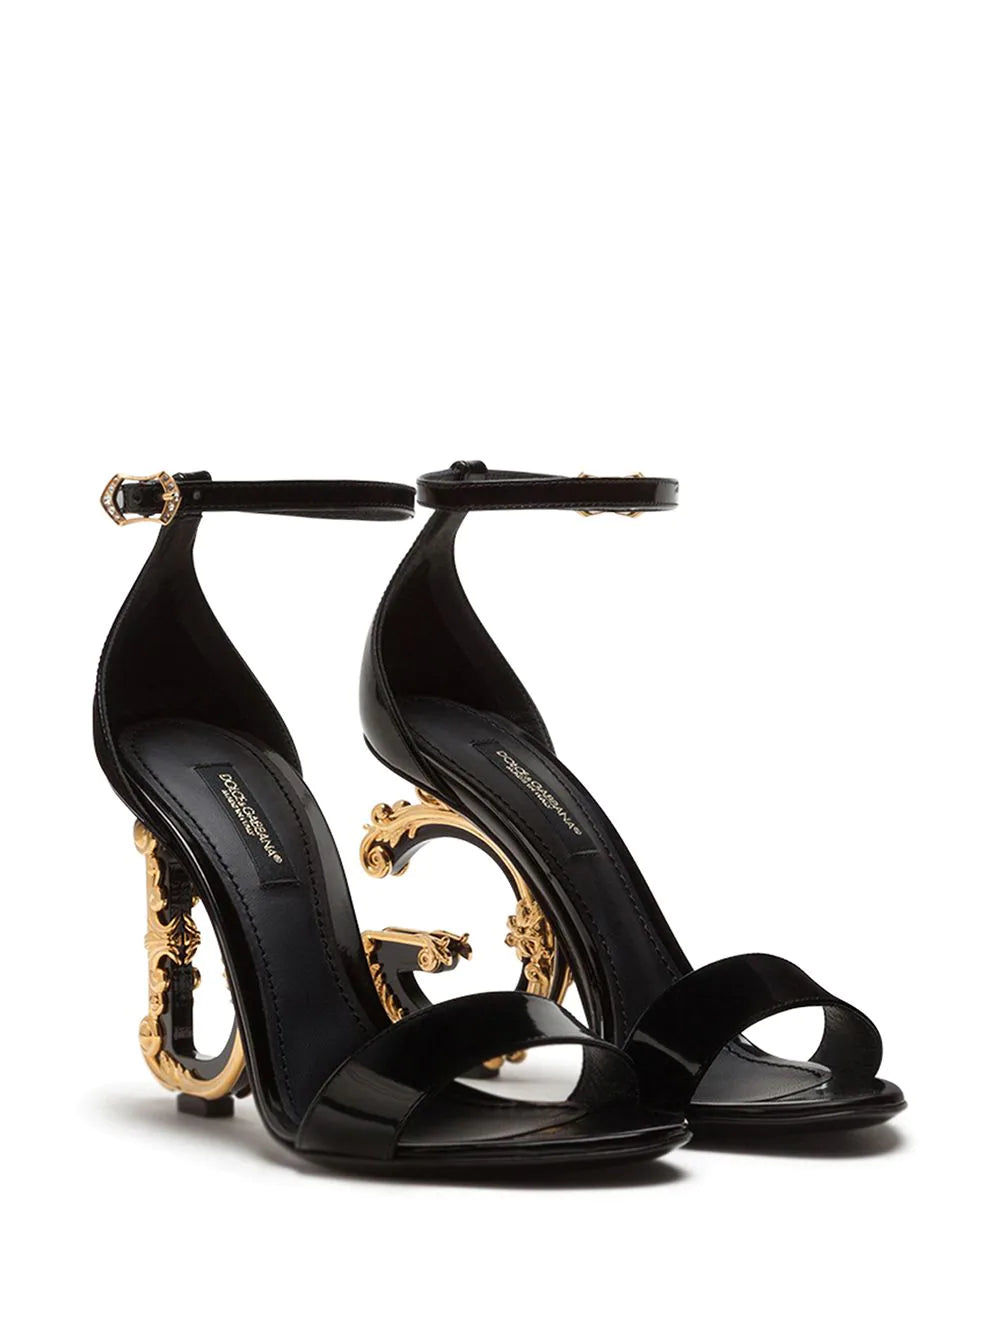 Dolce & Gabbana Black Baroque Heels Sandals